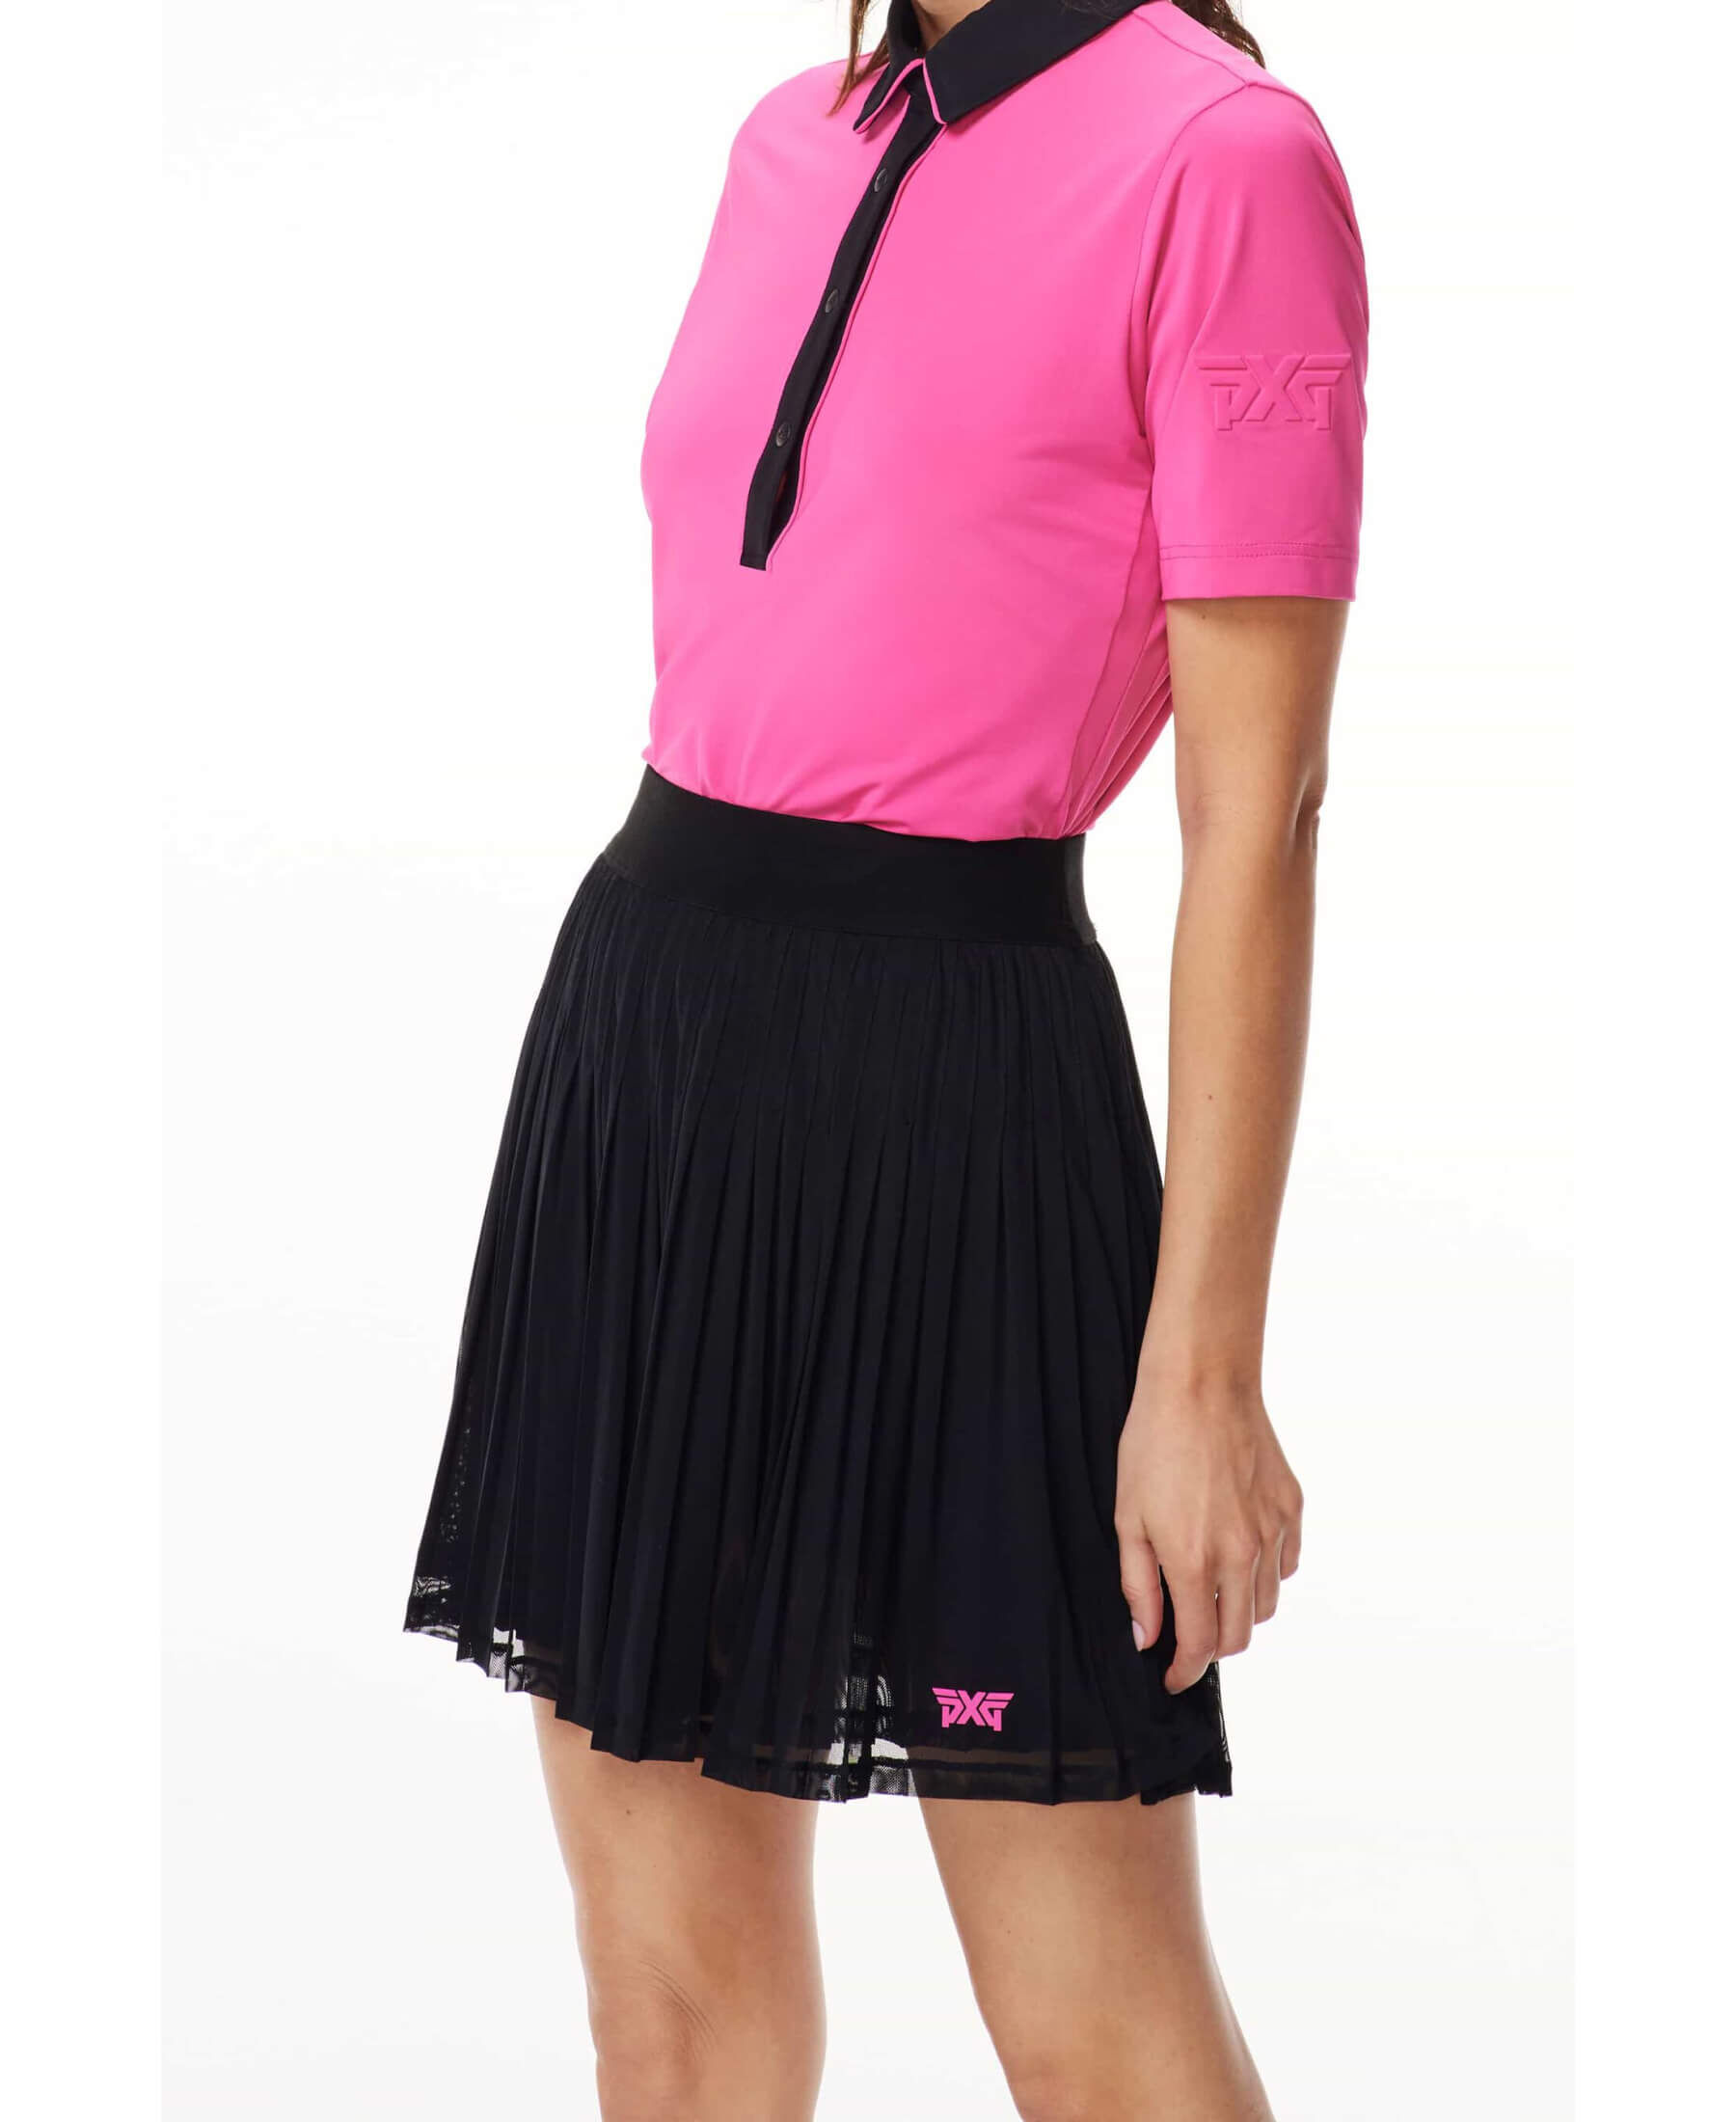 Flex Pleated Skirt | Shop the Highest Quality Golf Apparel, Gear